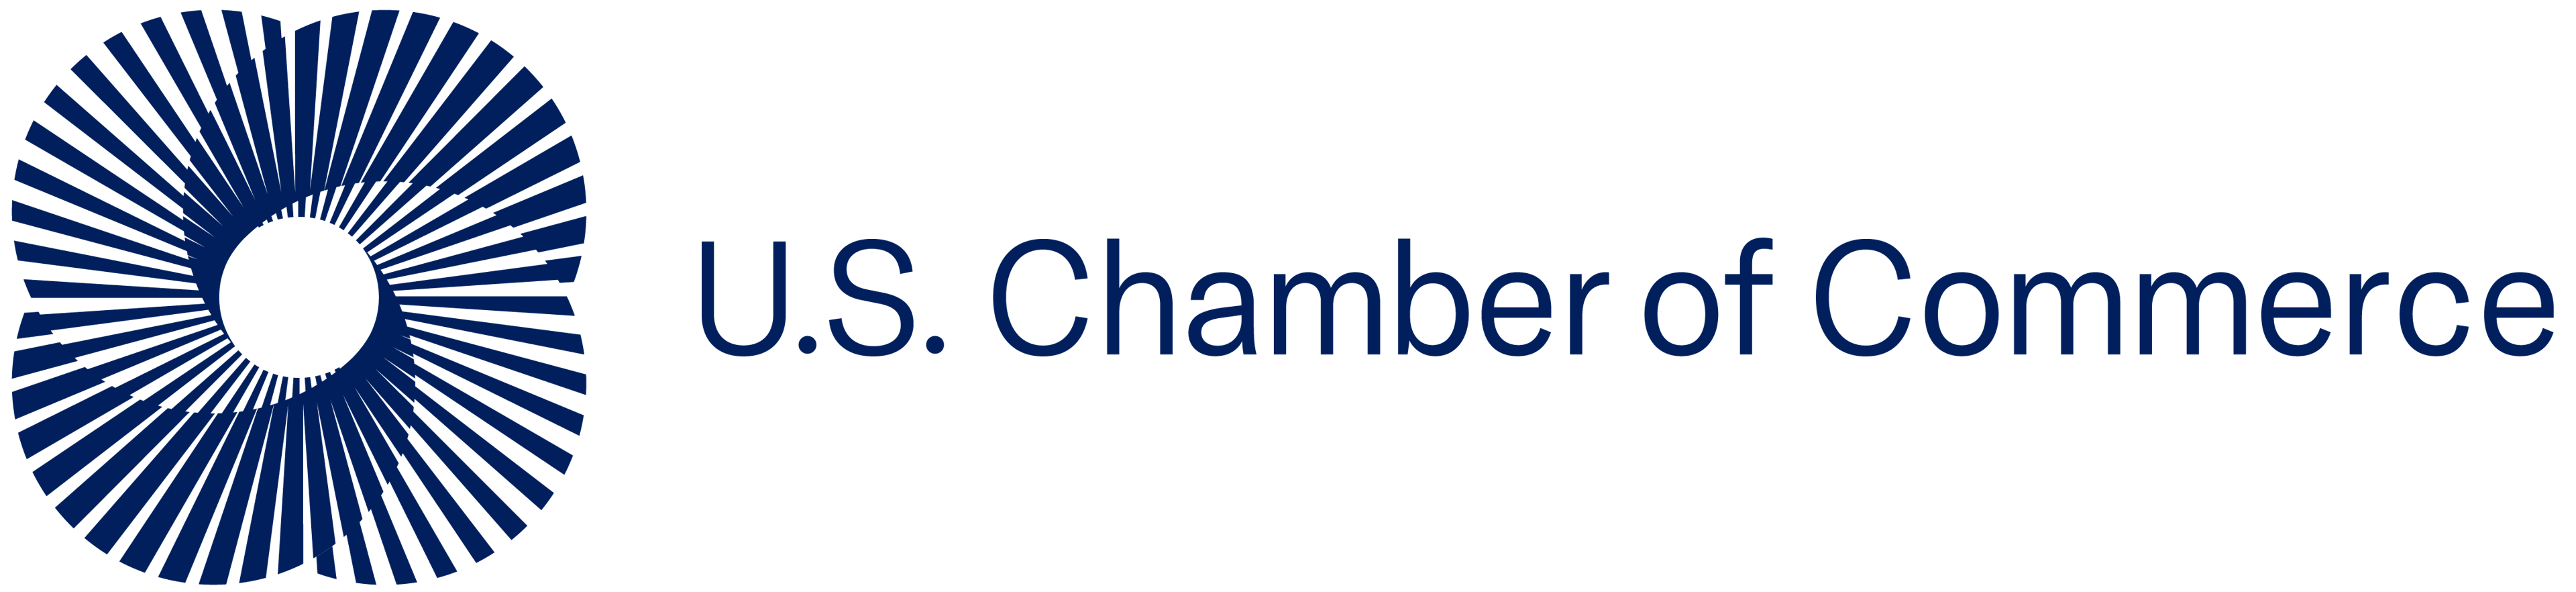 US Champer logo